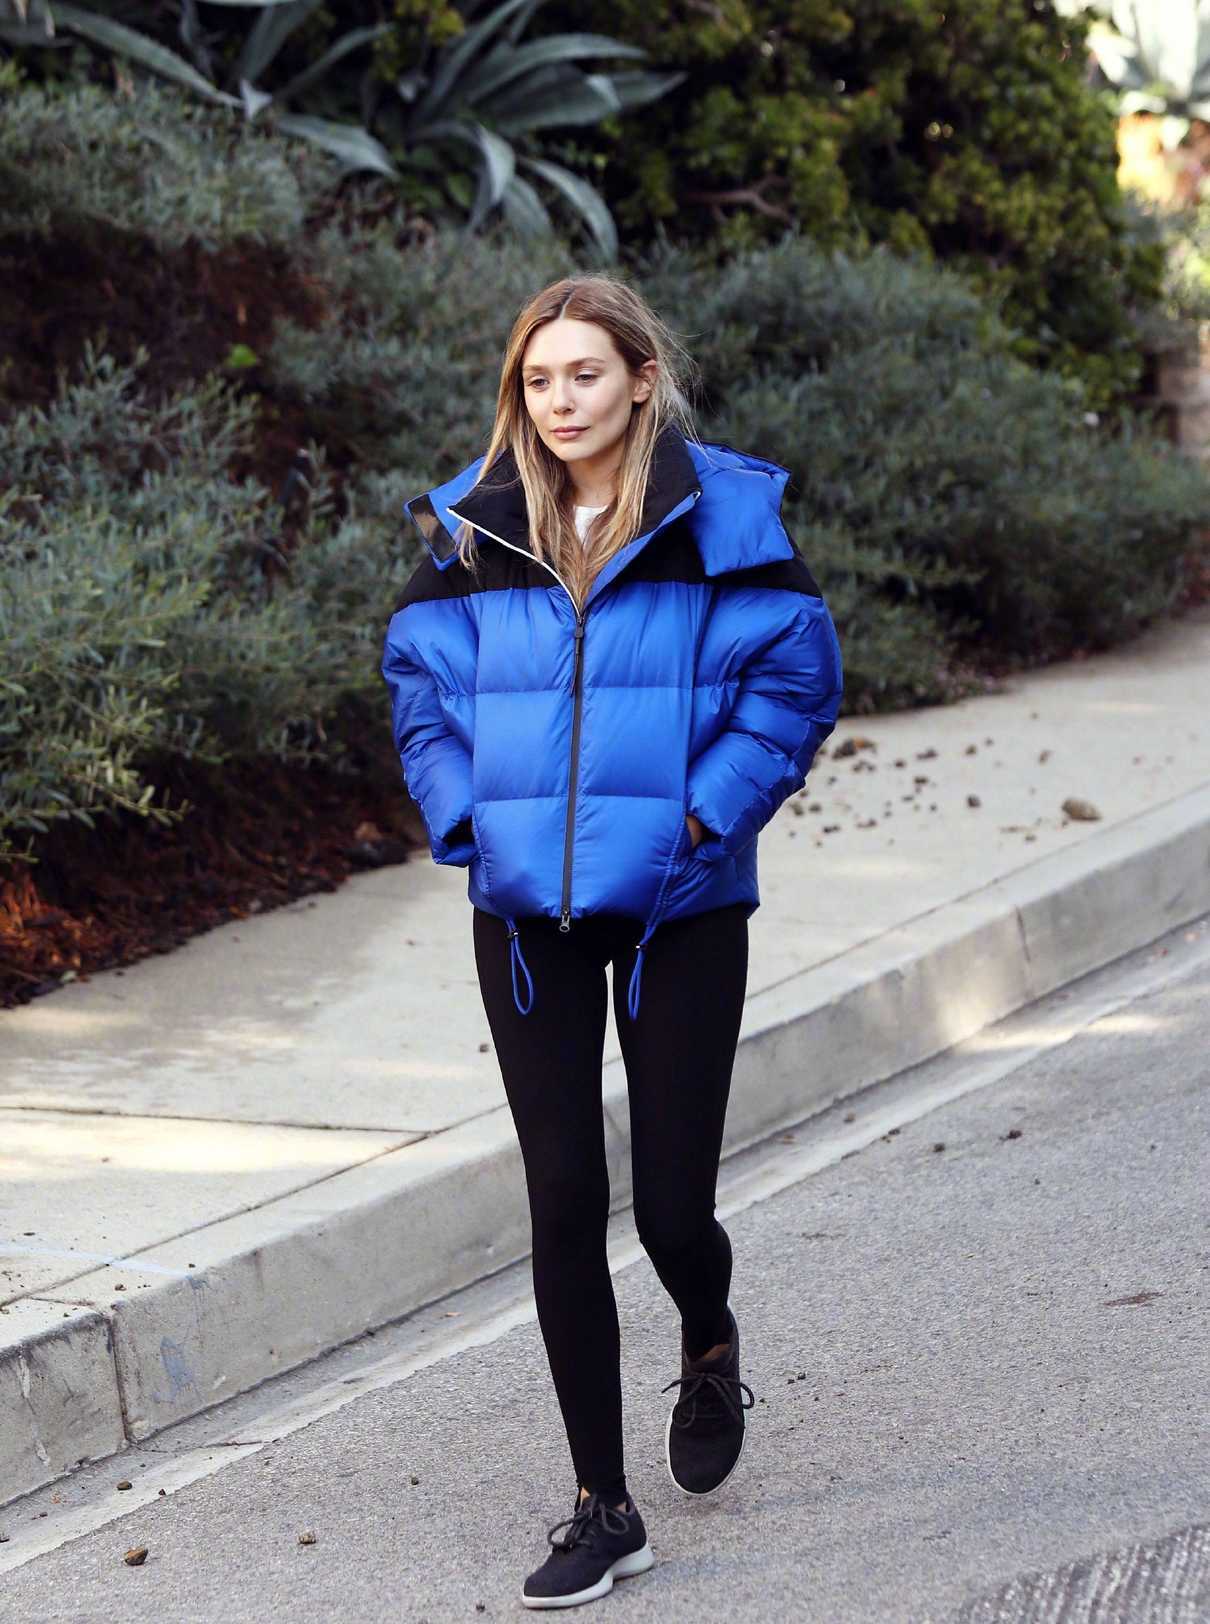 Elizabeth Olsen in a Blue Jacket